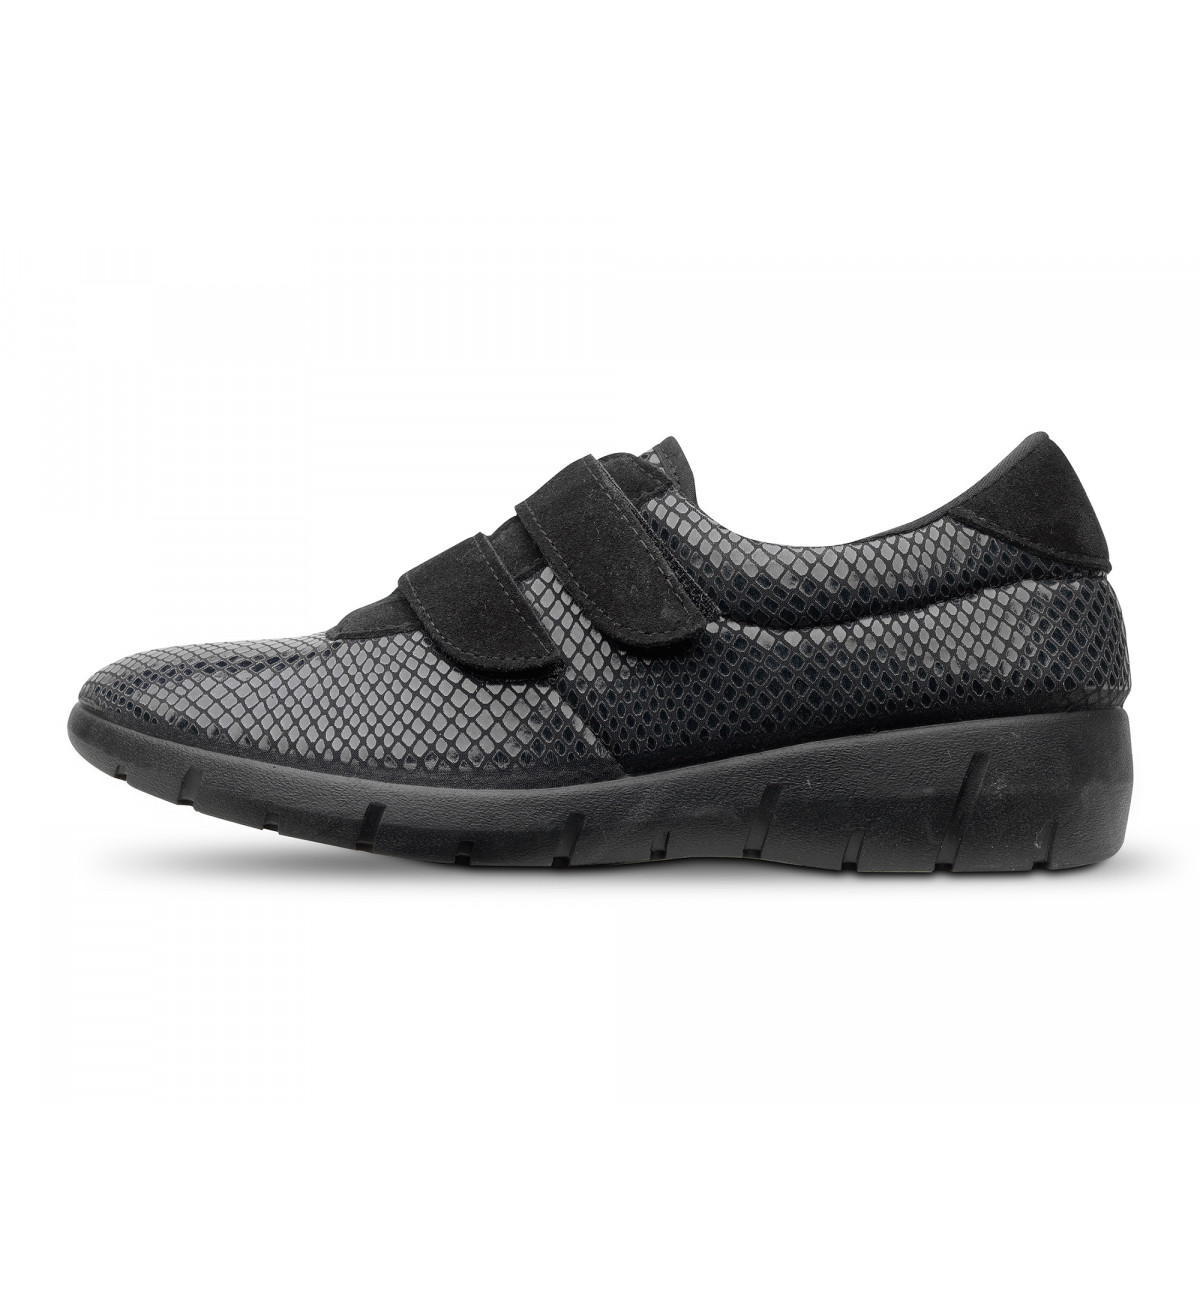 Zapato Merceditas negro tejido adaptable